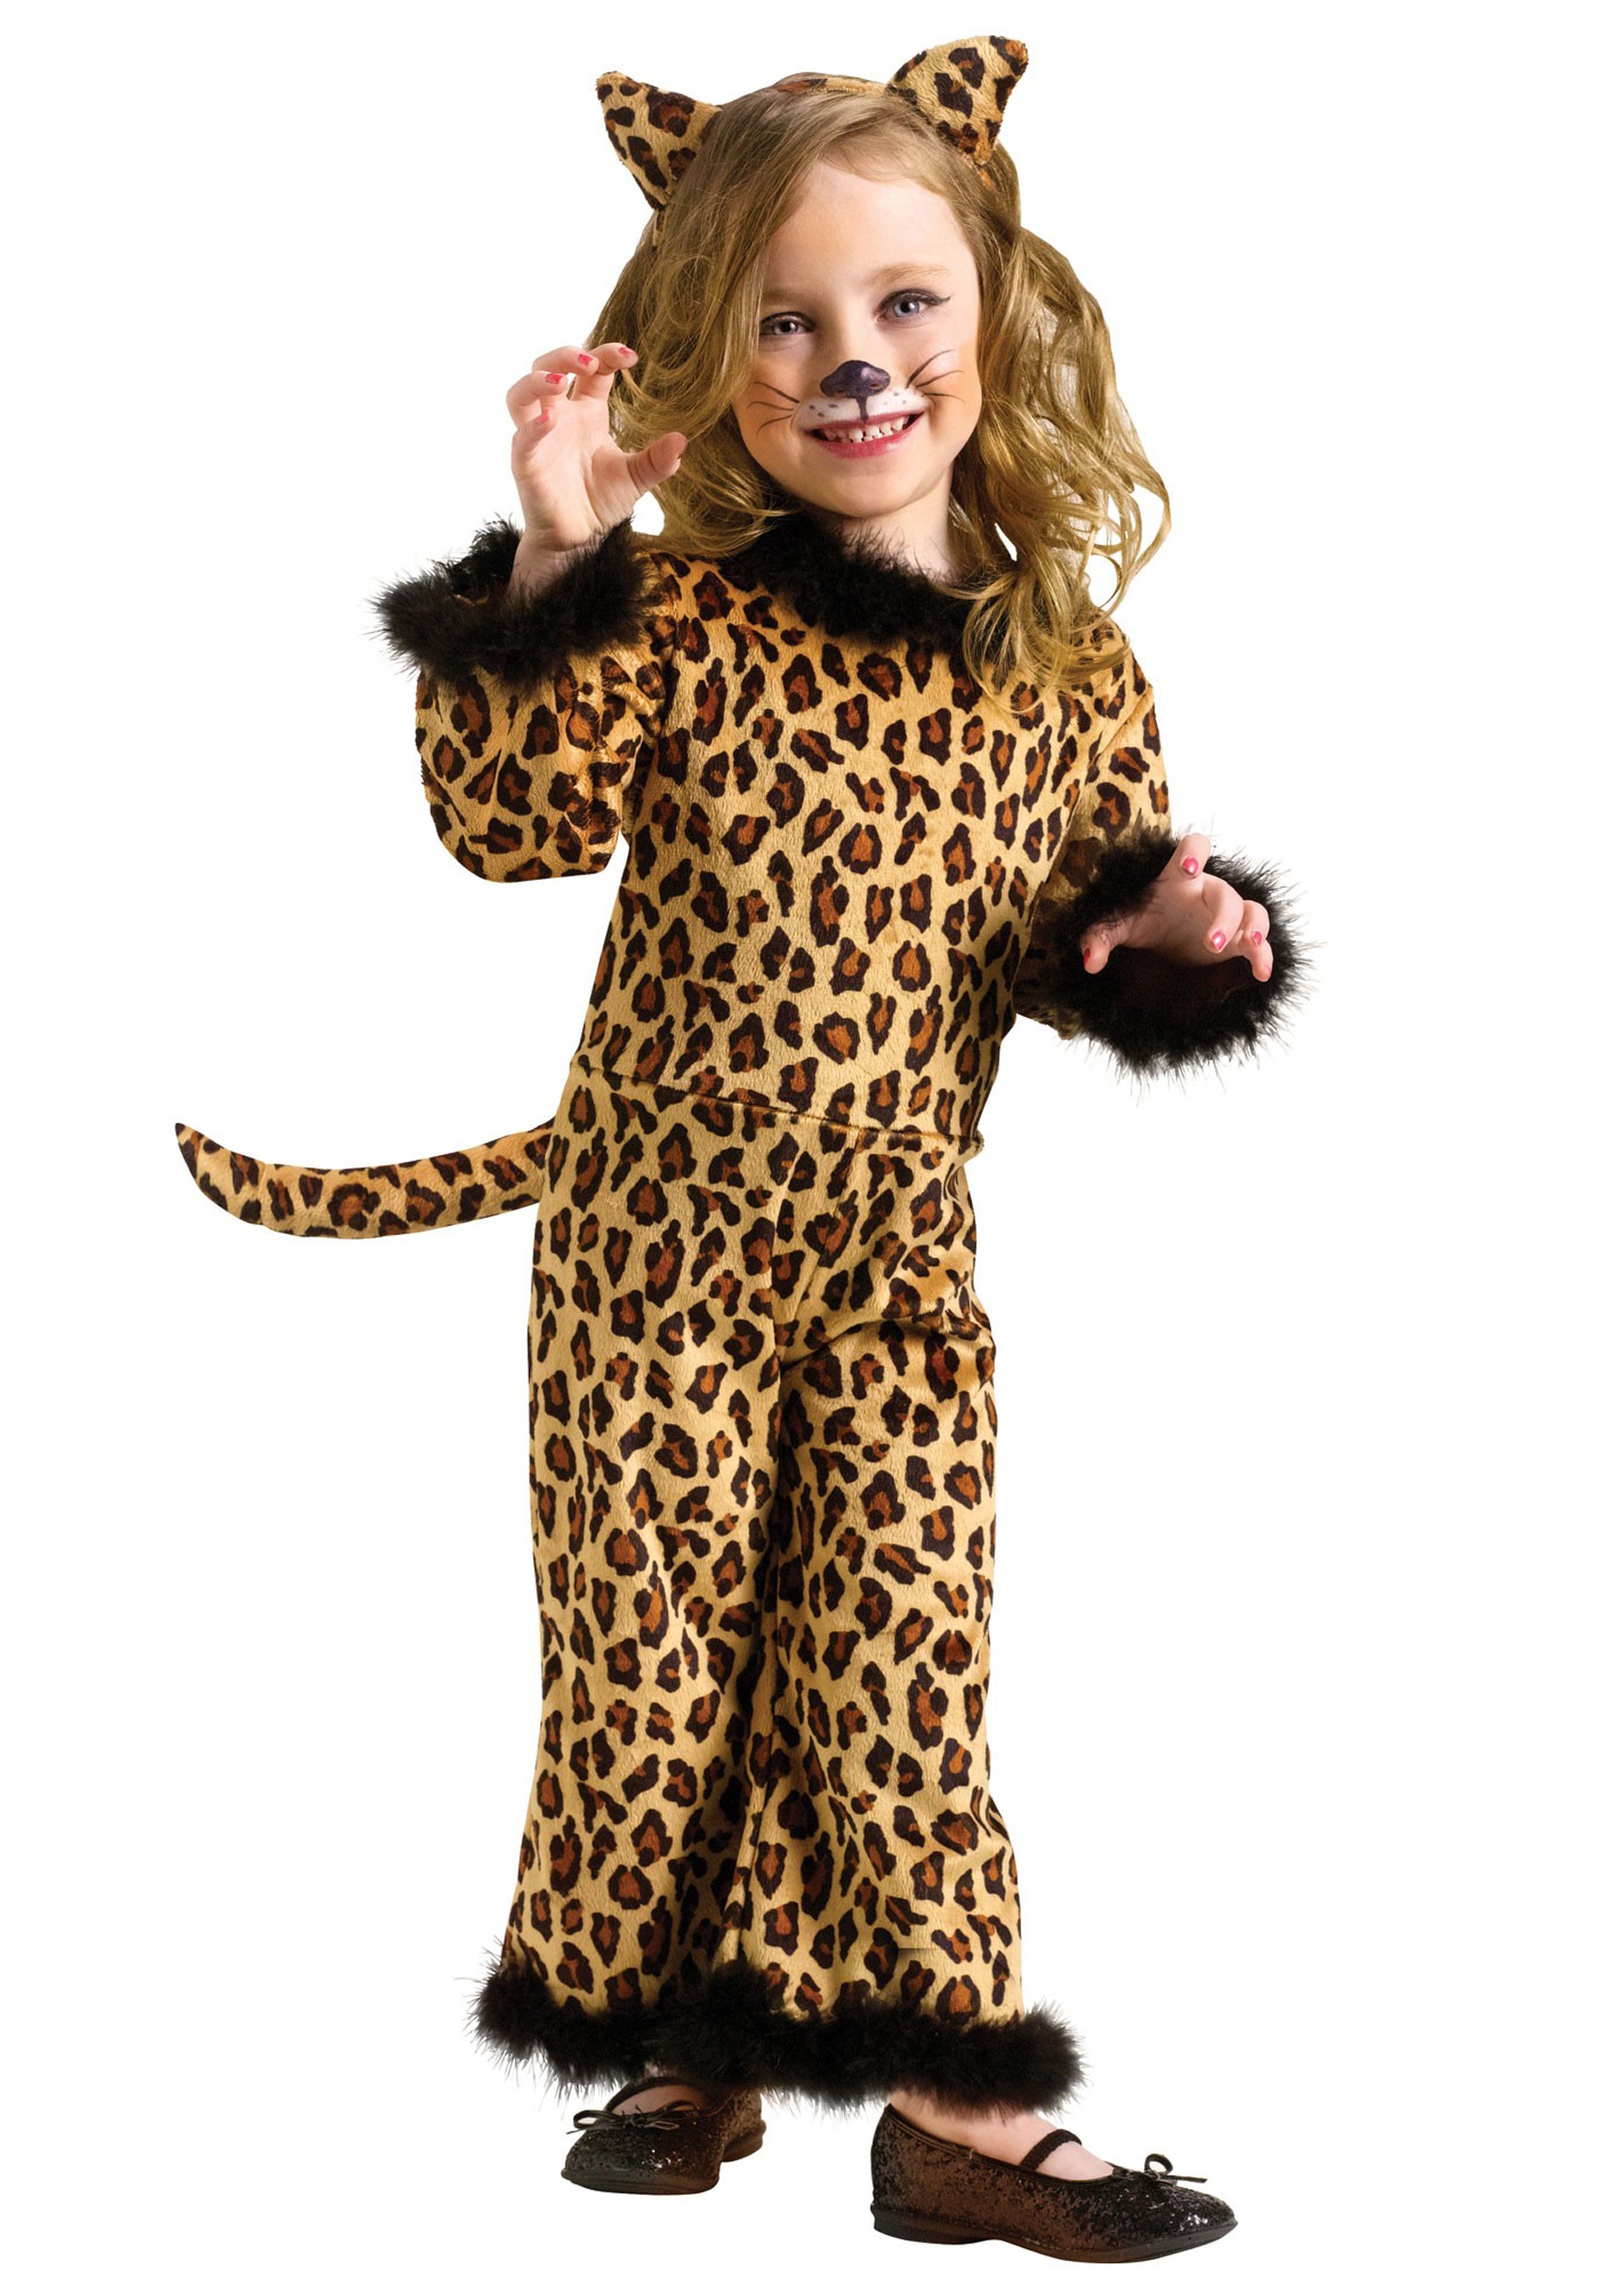 Costume Ideas: DIY Pretty Leopard Costume - Walmart.com Little Leopard Cost...